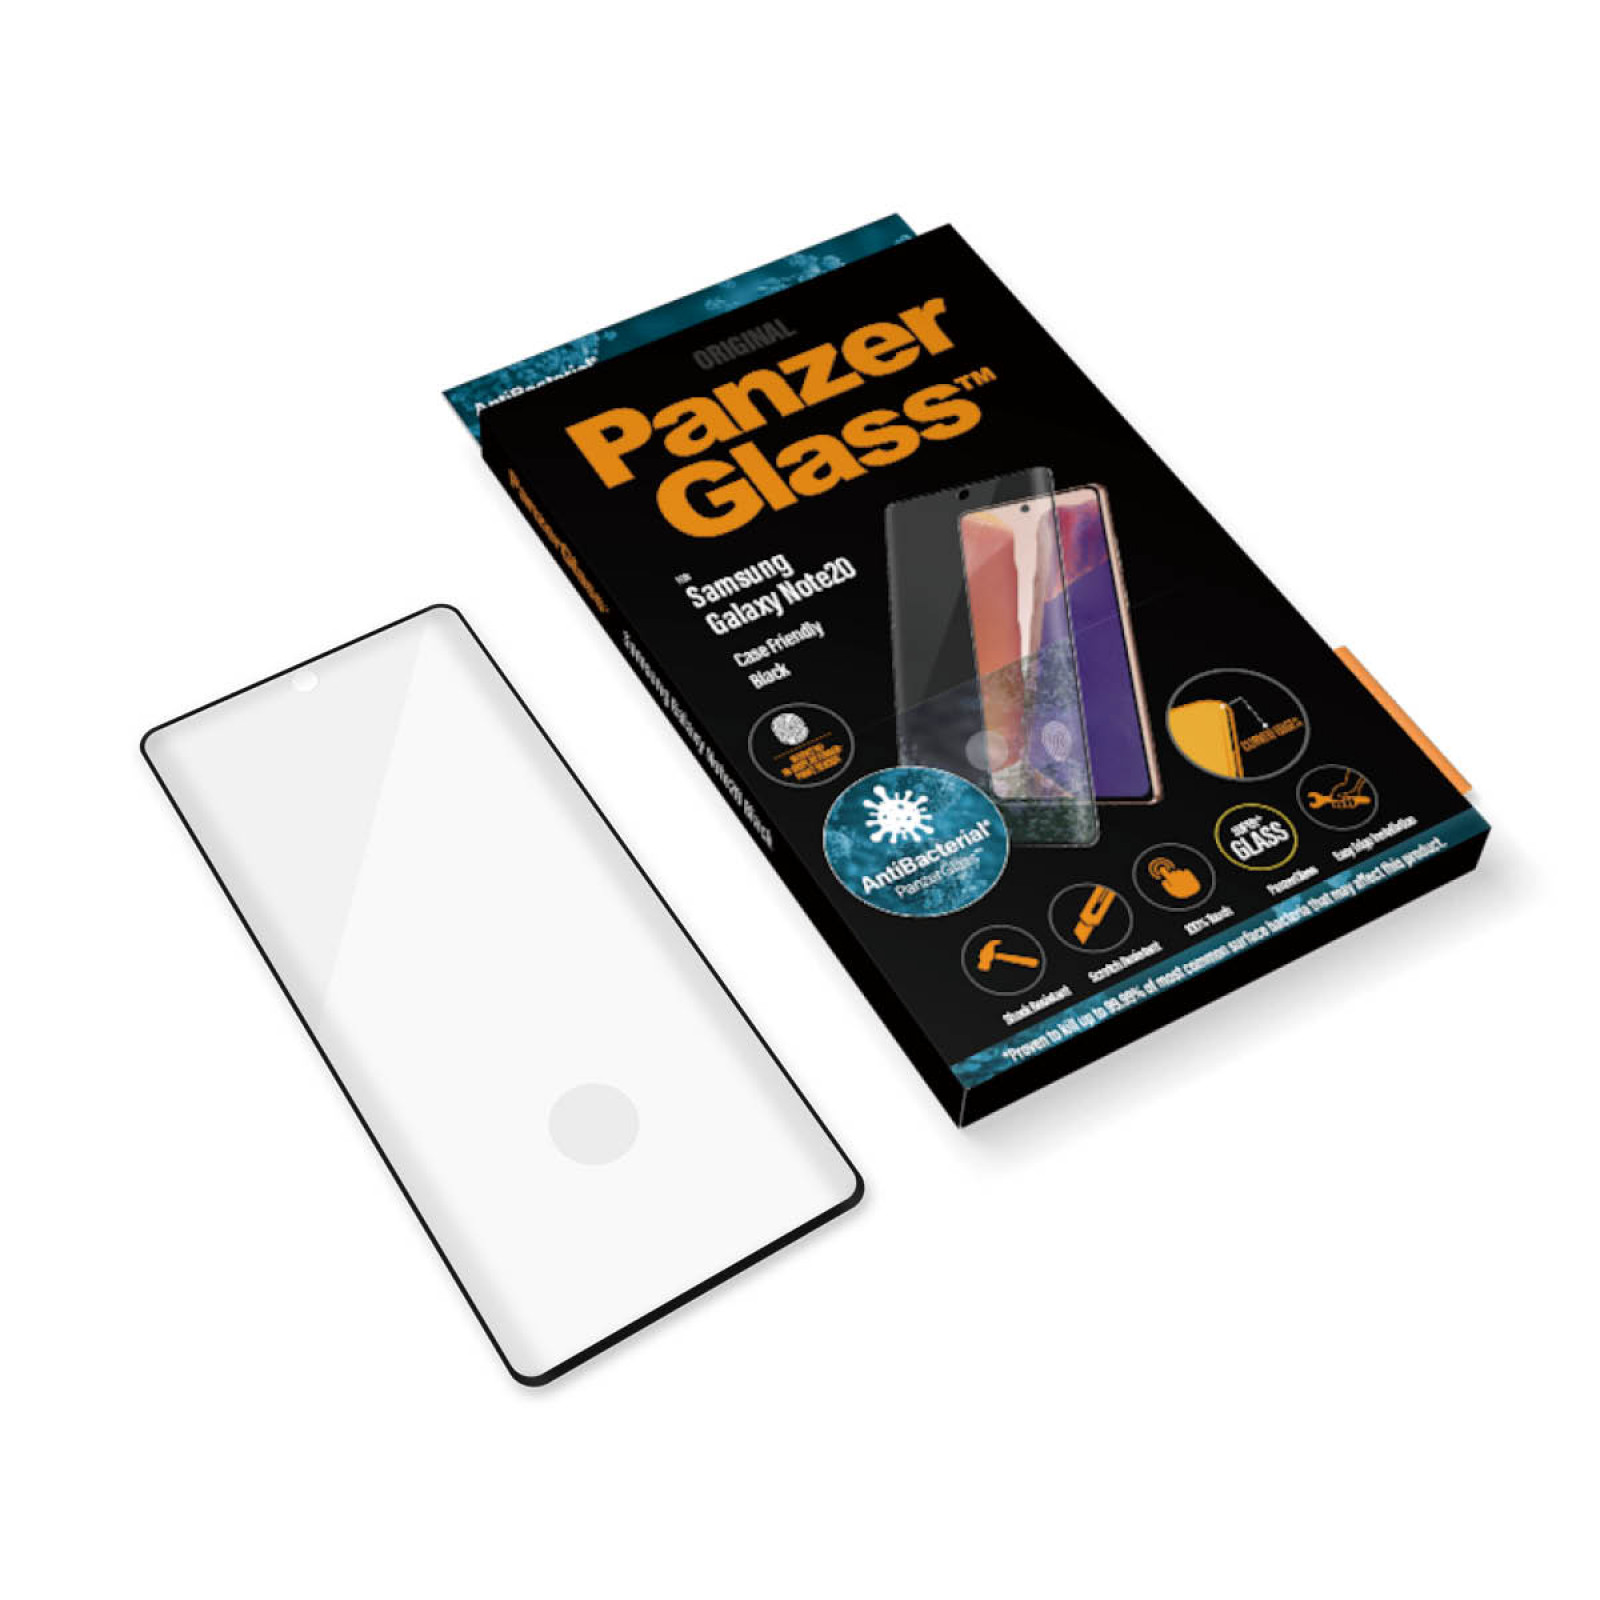 Стъклен протектор PanzerGlass за Samsung Galaxy Note 20 Case Friendly FingerPrint AntiBacterial Черен